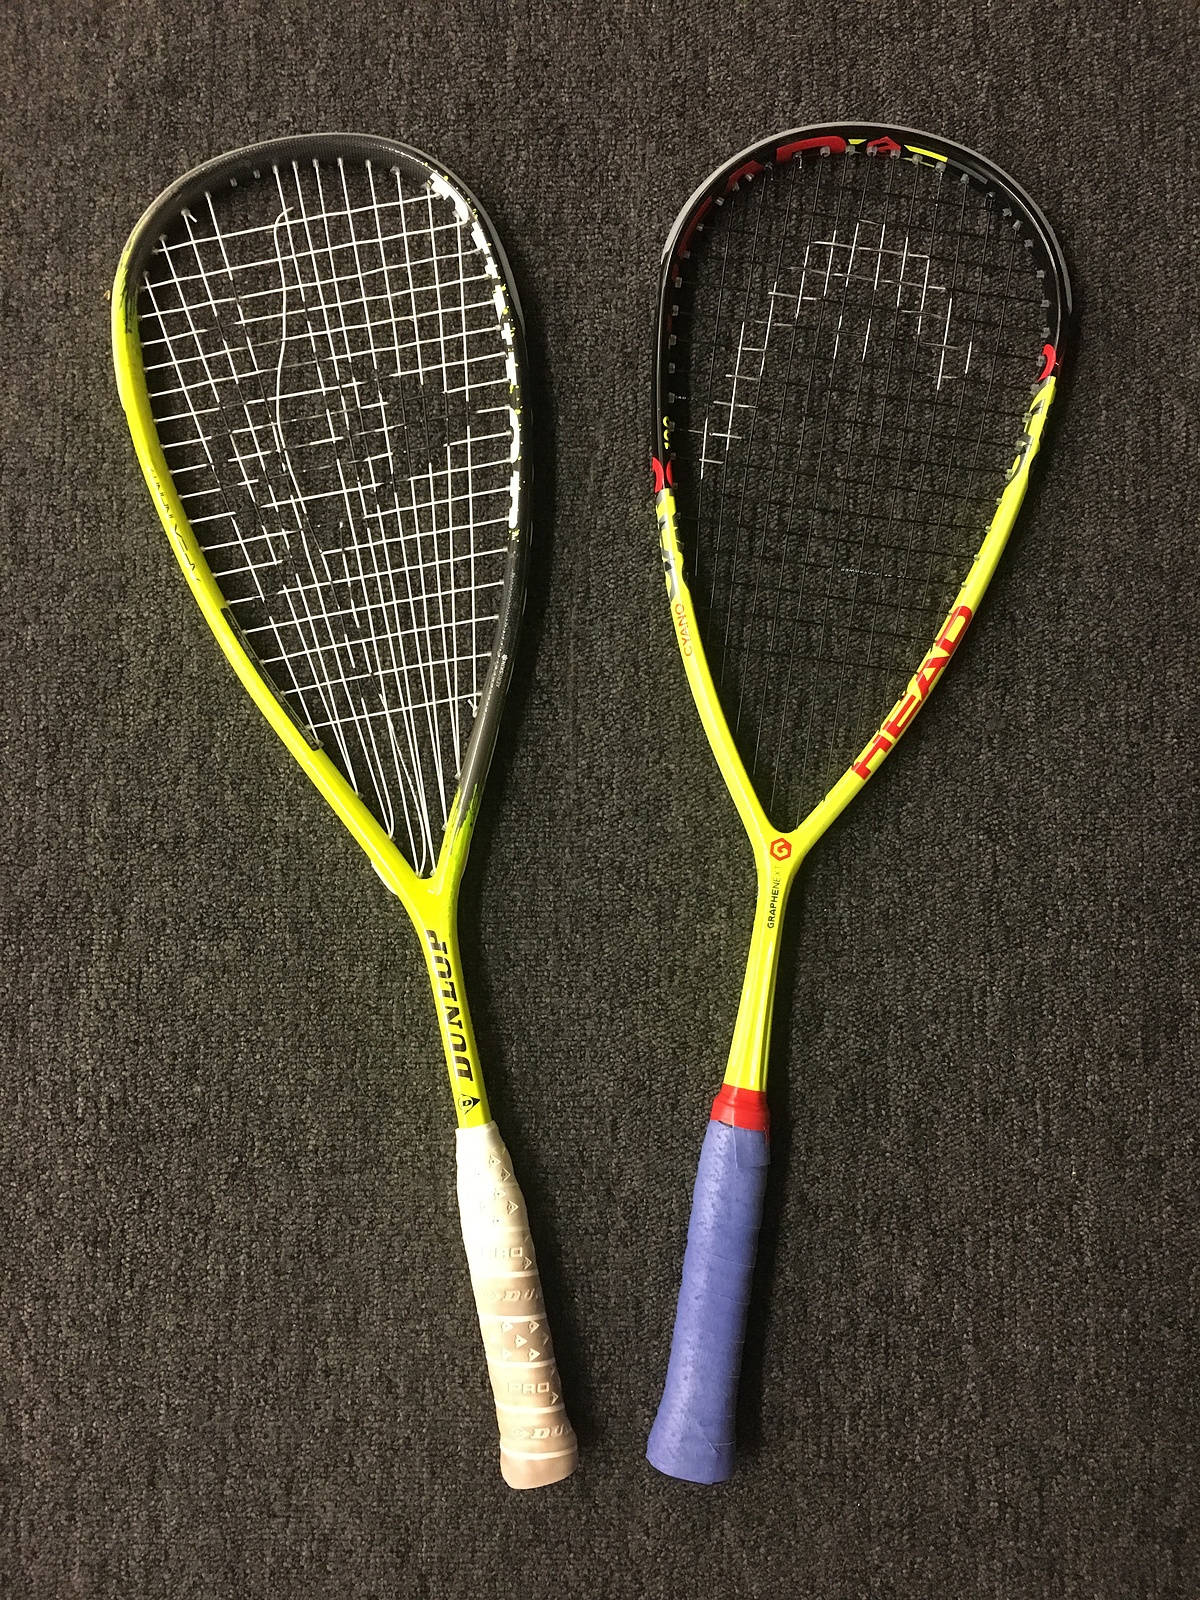 Dunlop Apex Infinity Squash Racket Source